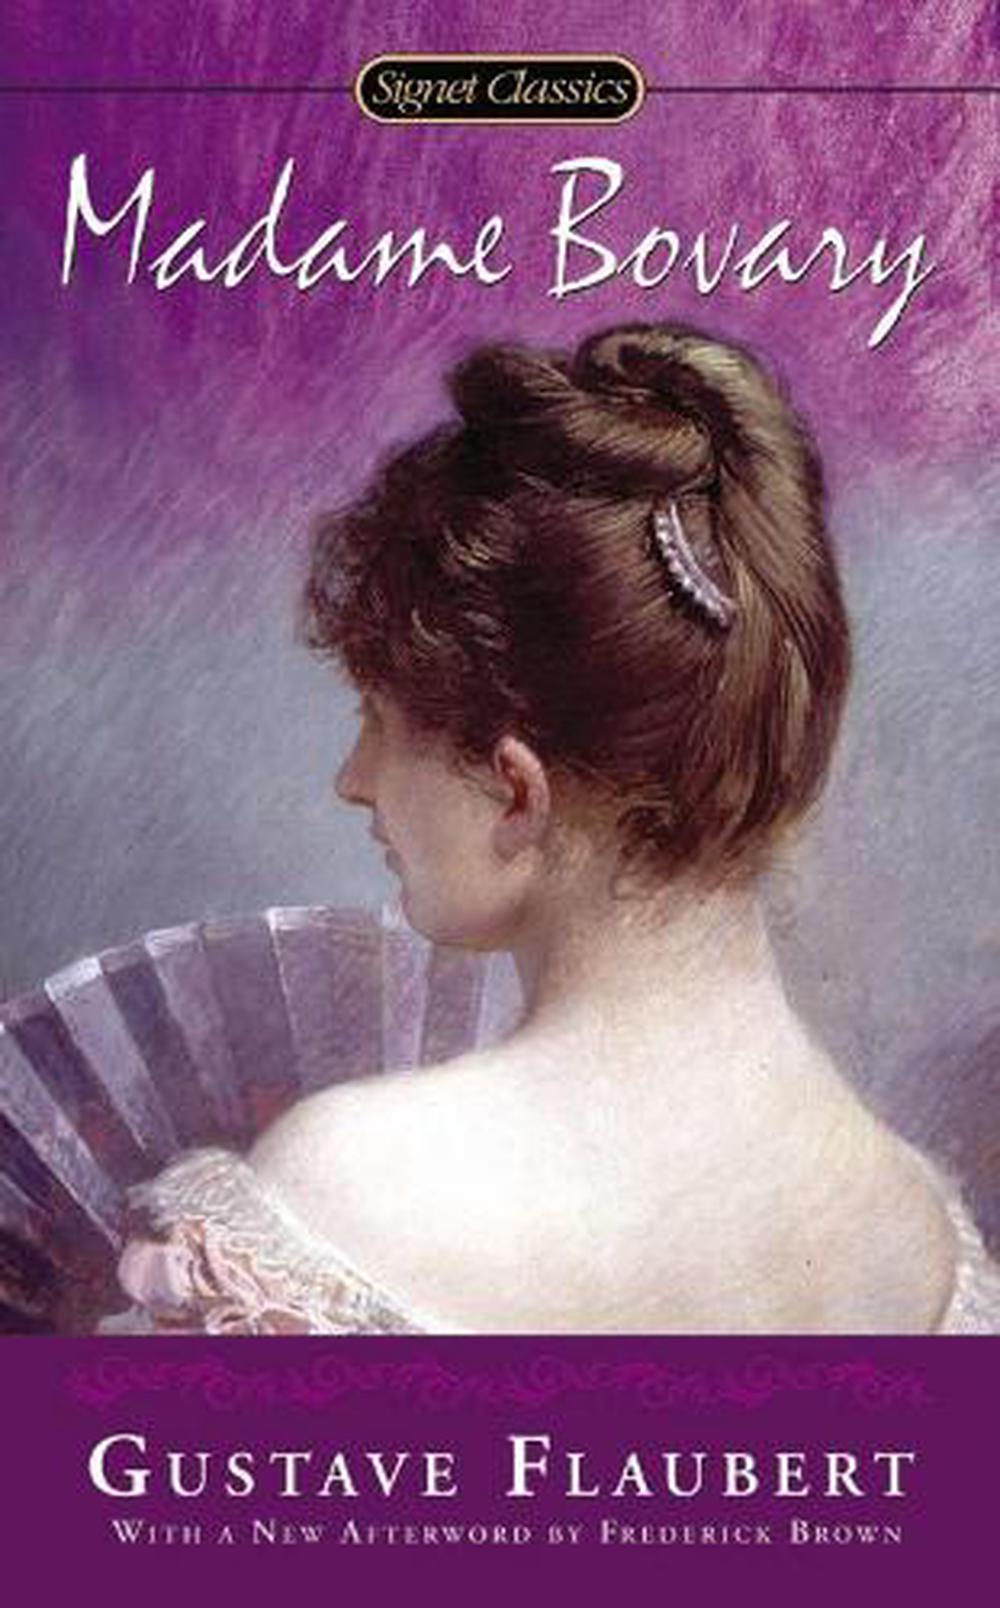 La signora Bovary by Gustave Flaubert